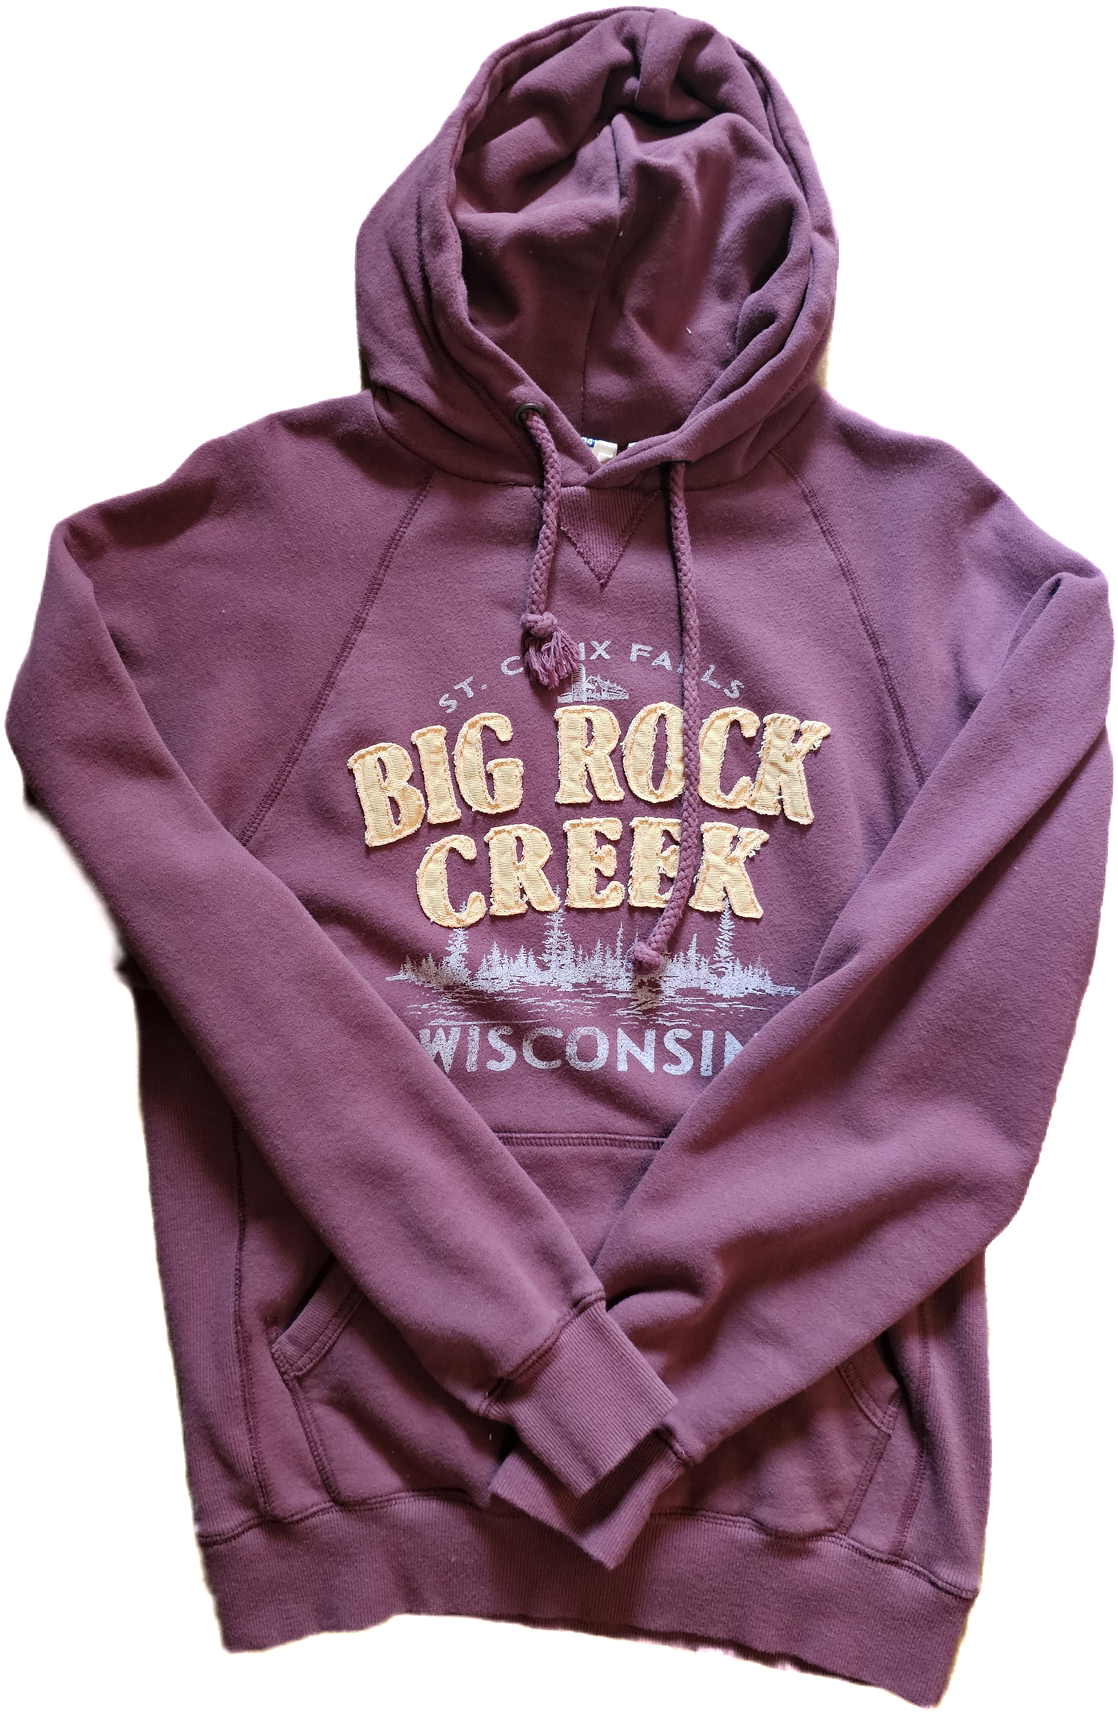 Big Rock Creek Applique Hoodie - Maroon with Gold